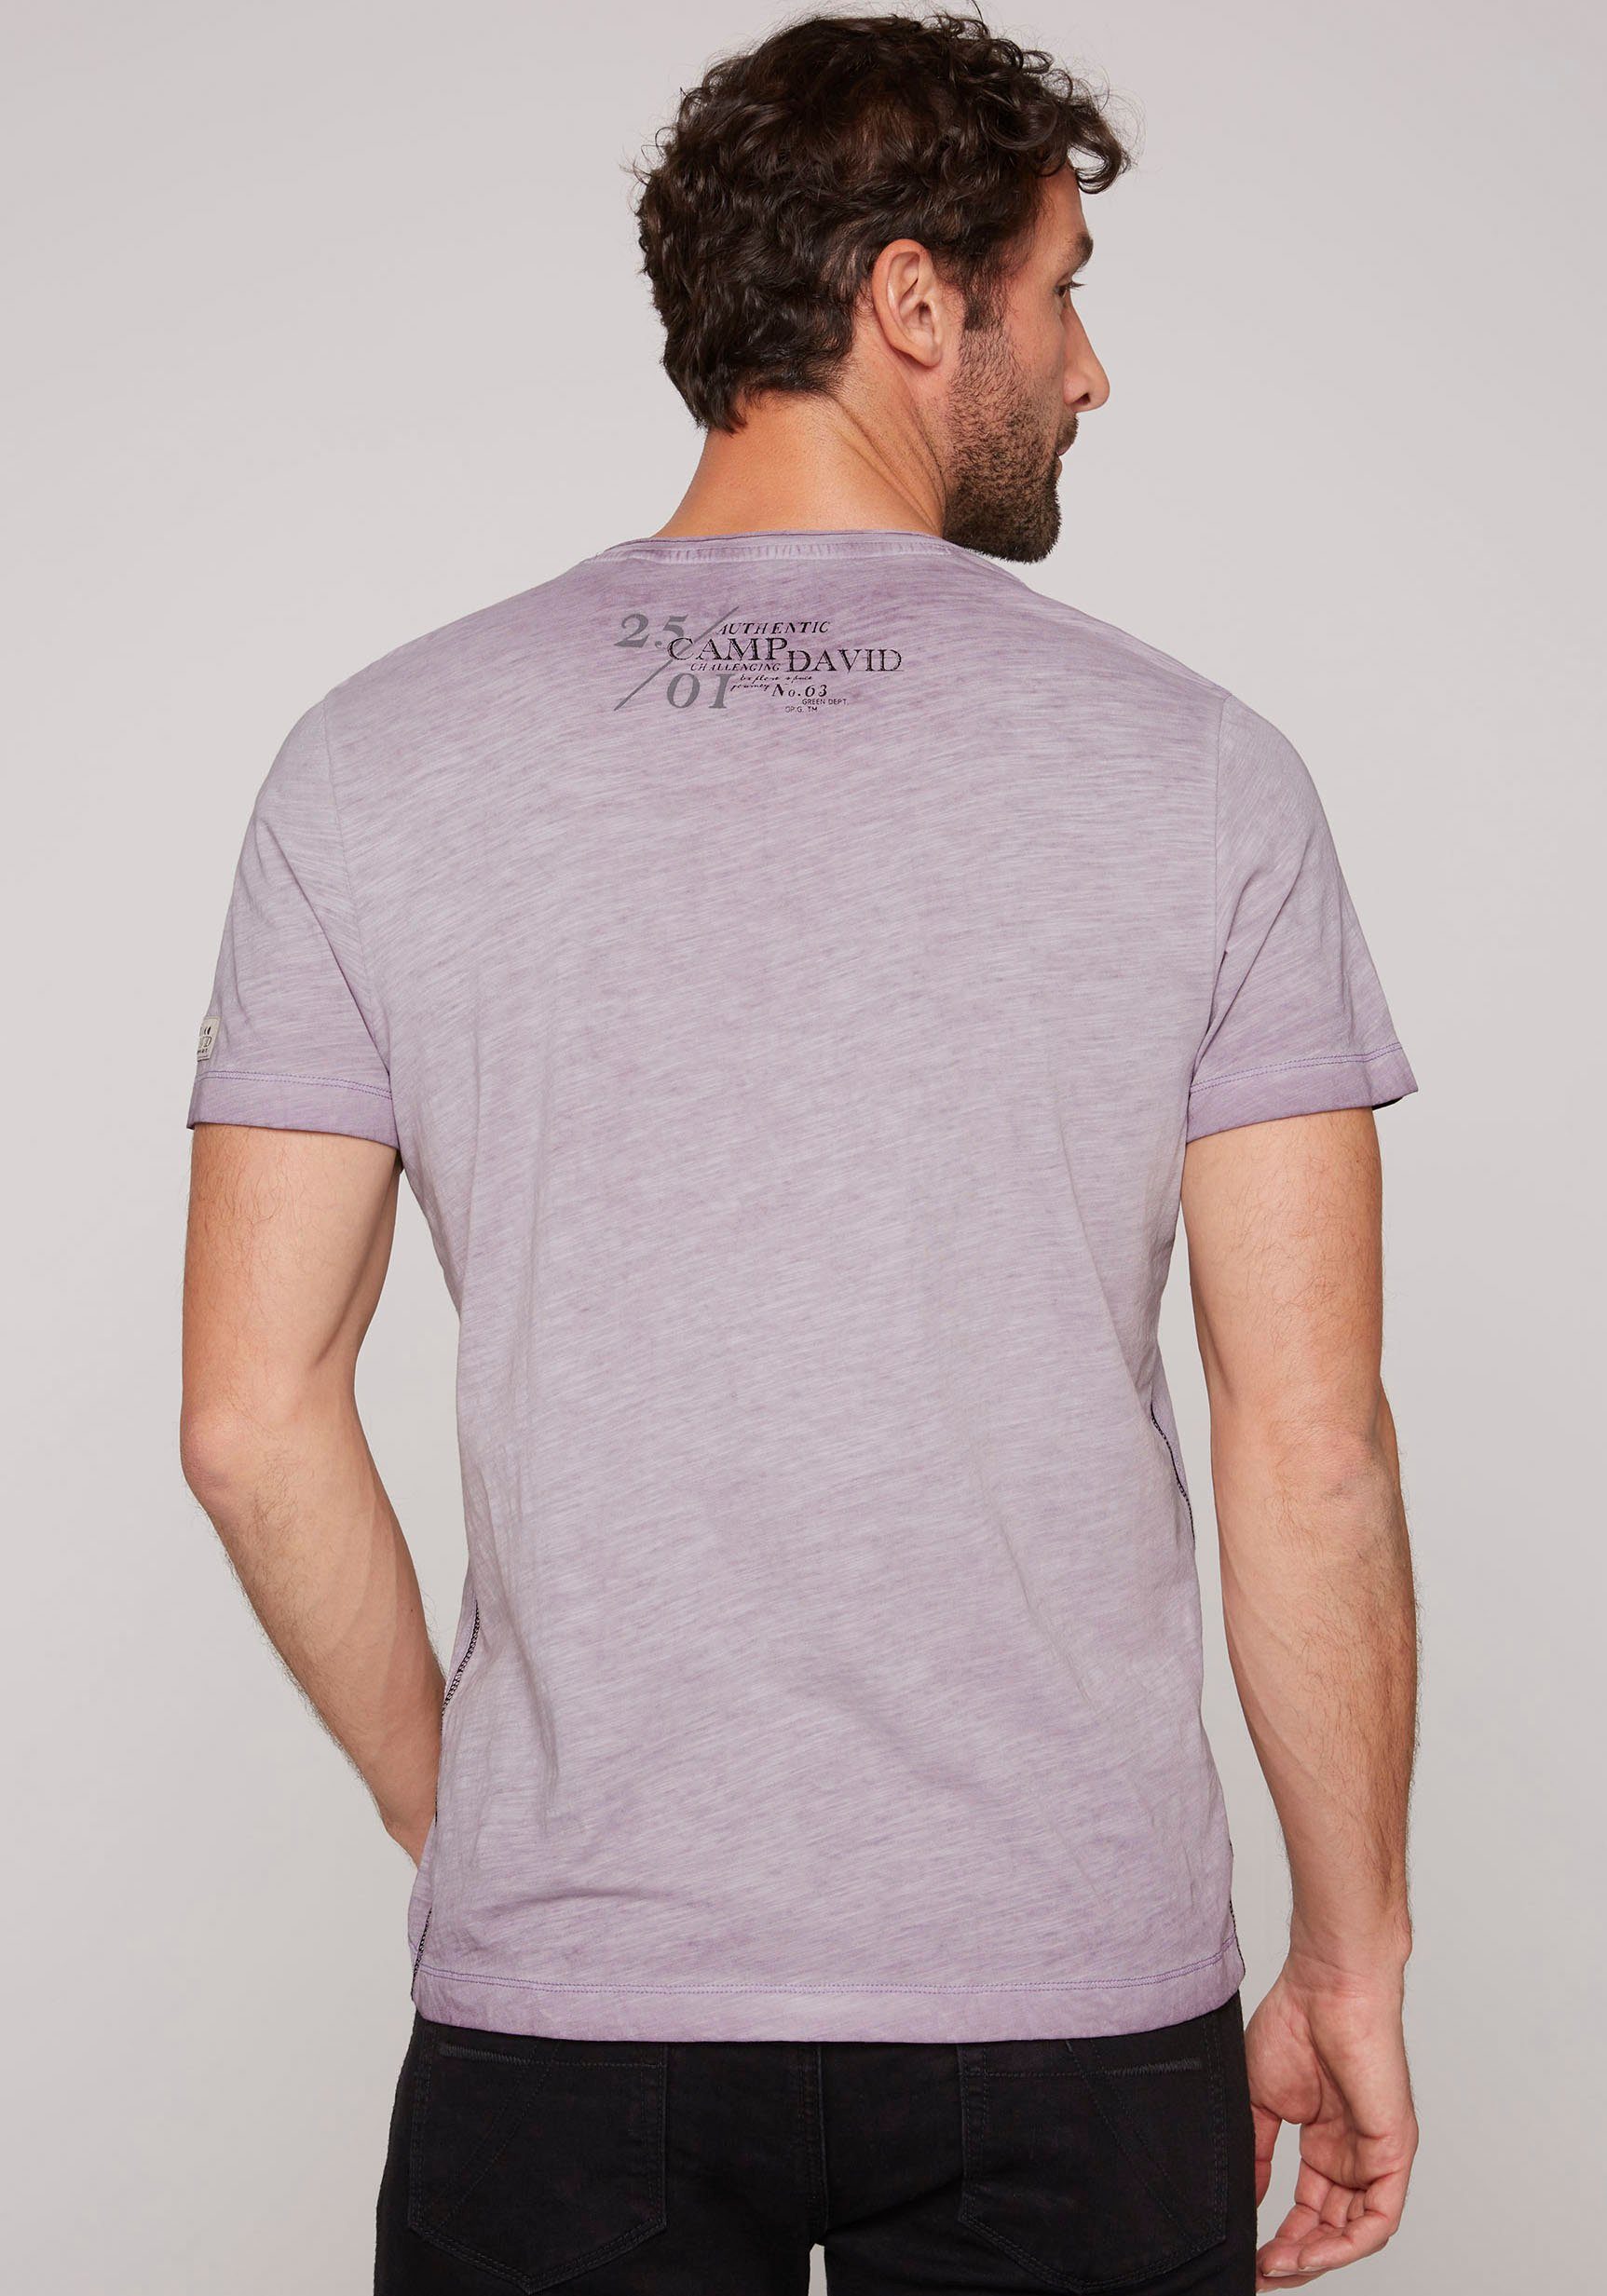 CAMP DAVID T-Shirt mit Logo-Druck violet french